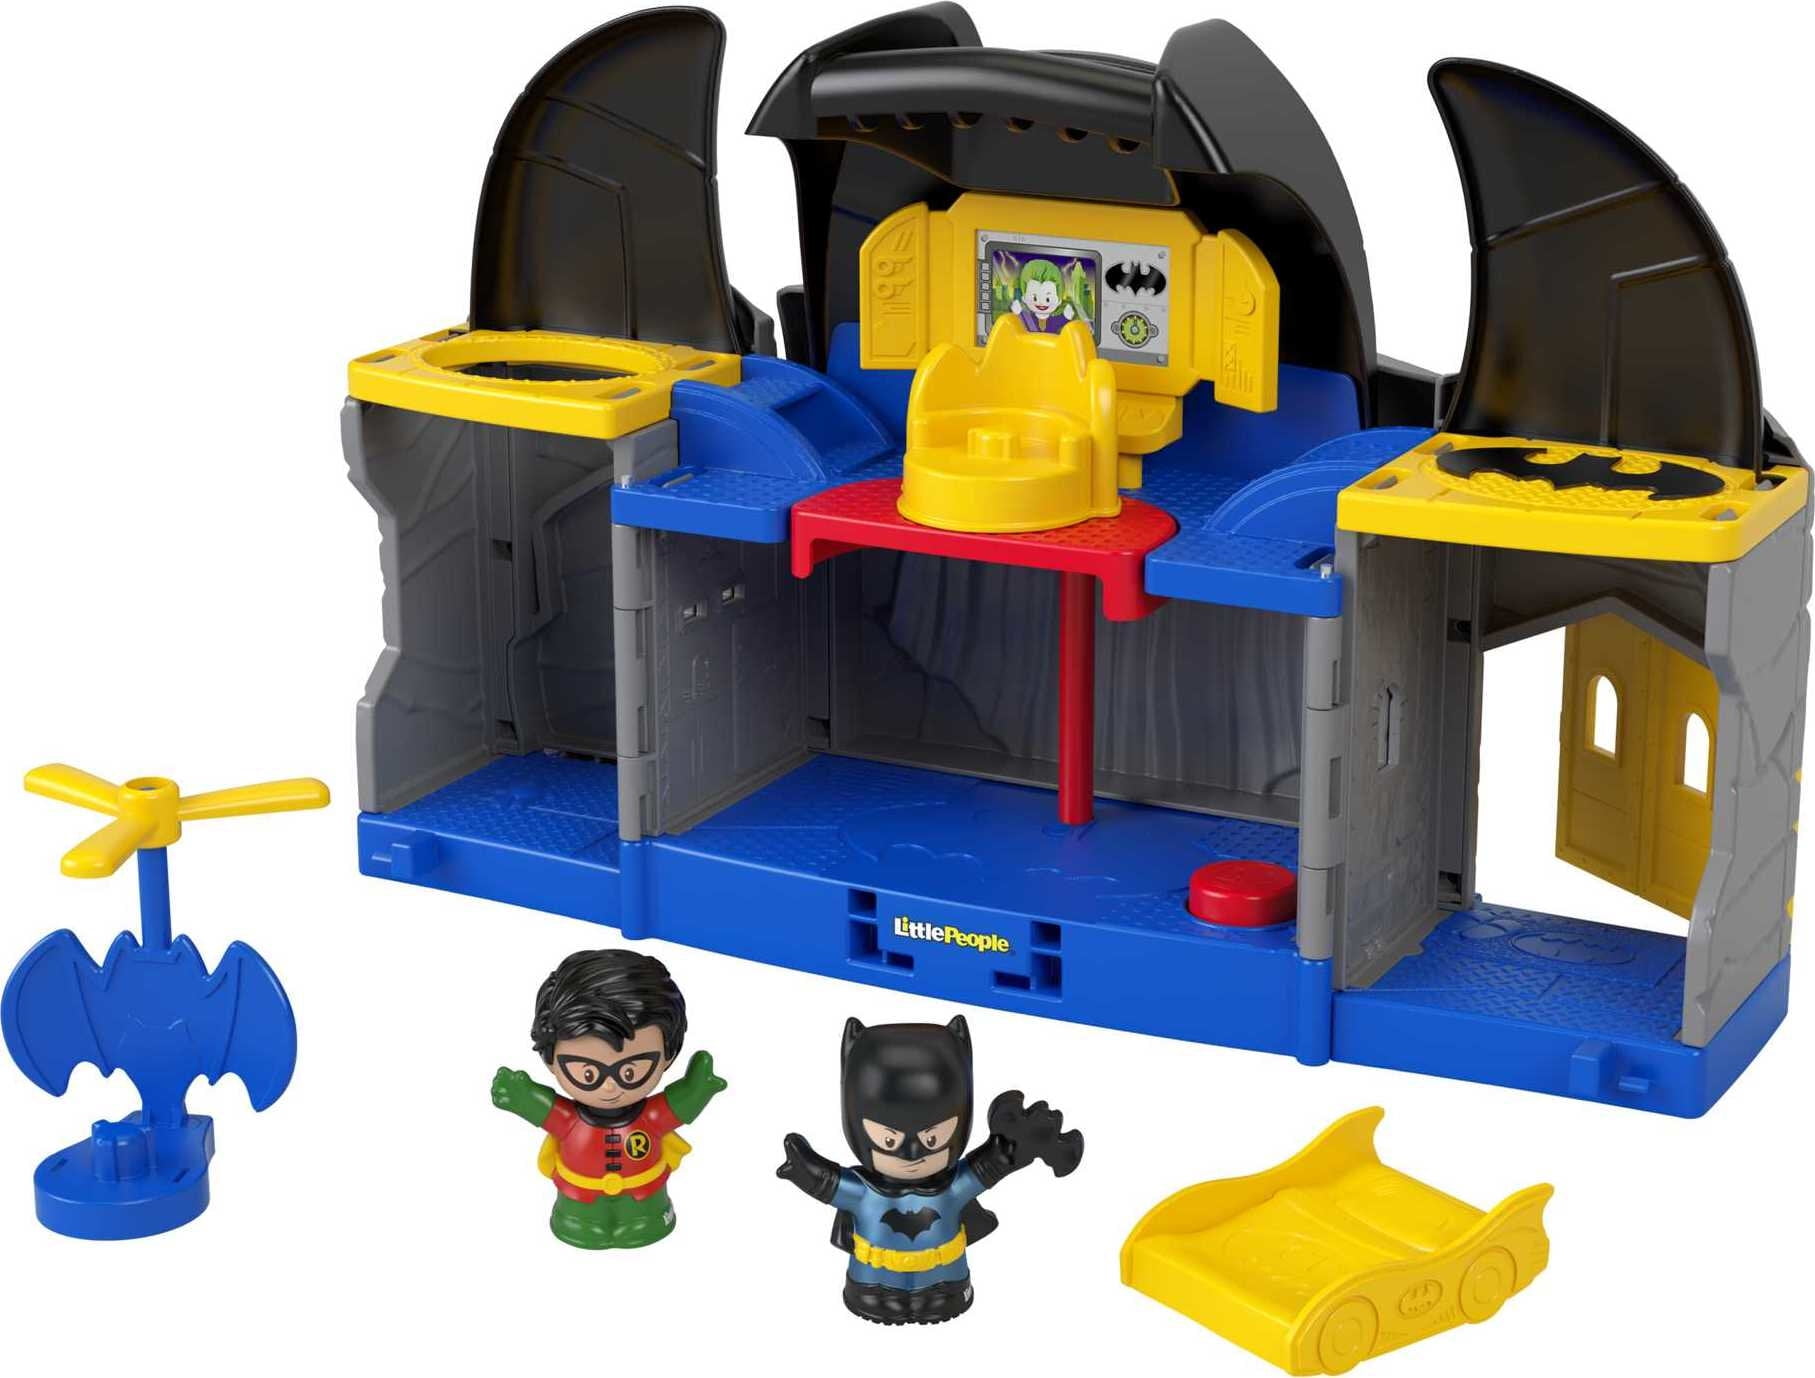 Little People DC Super Friends Batcave Batman Playset $12.45 + Free S&H w/ Walmart+ or $35+